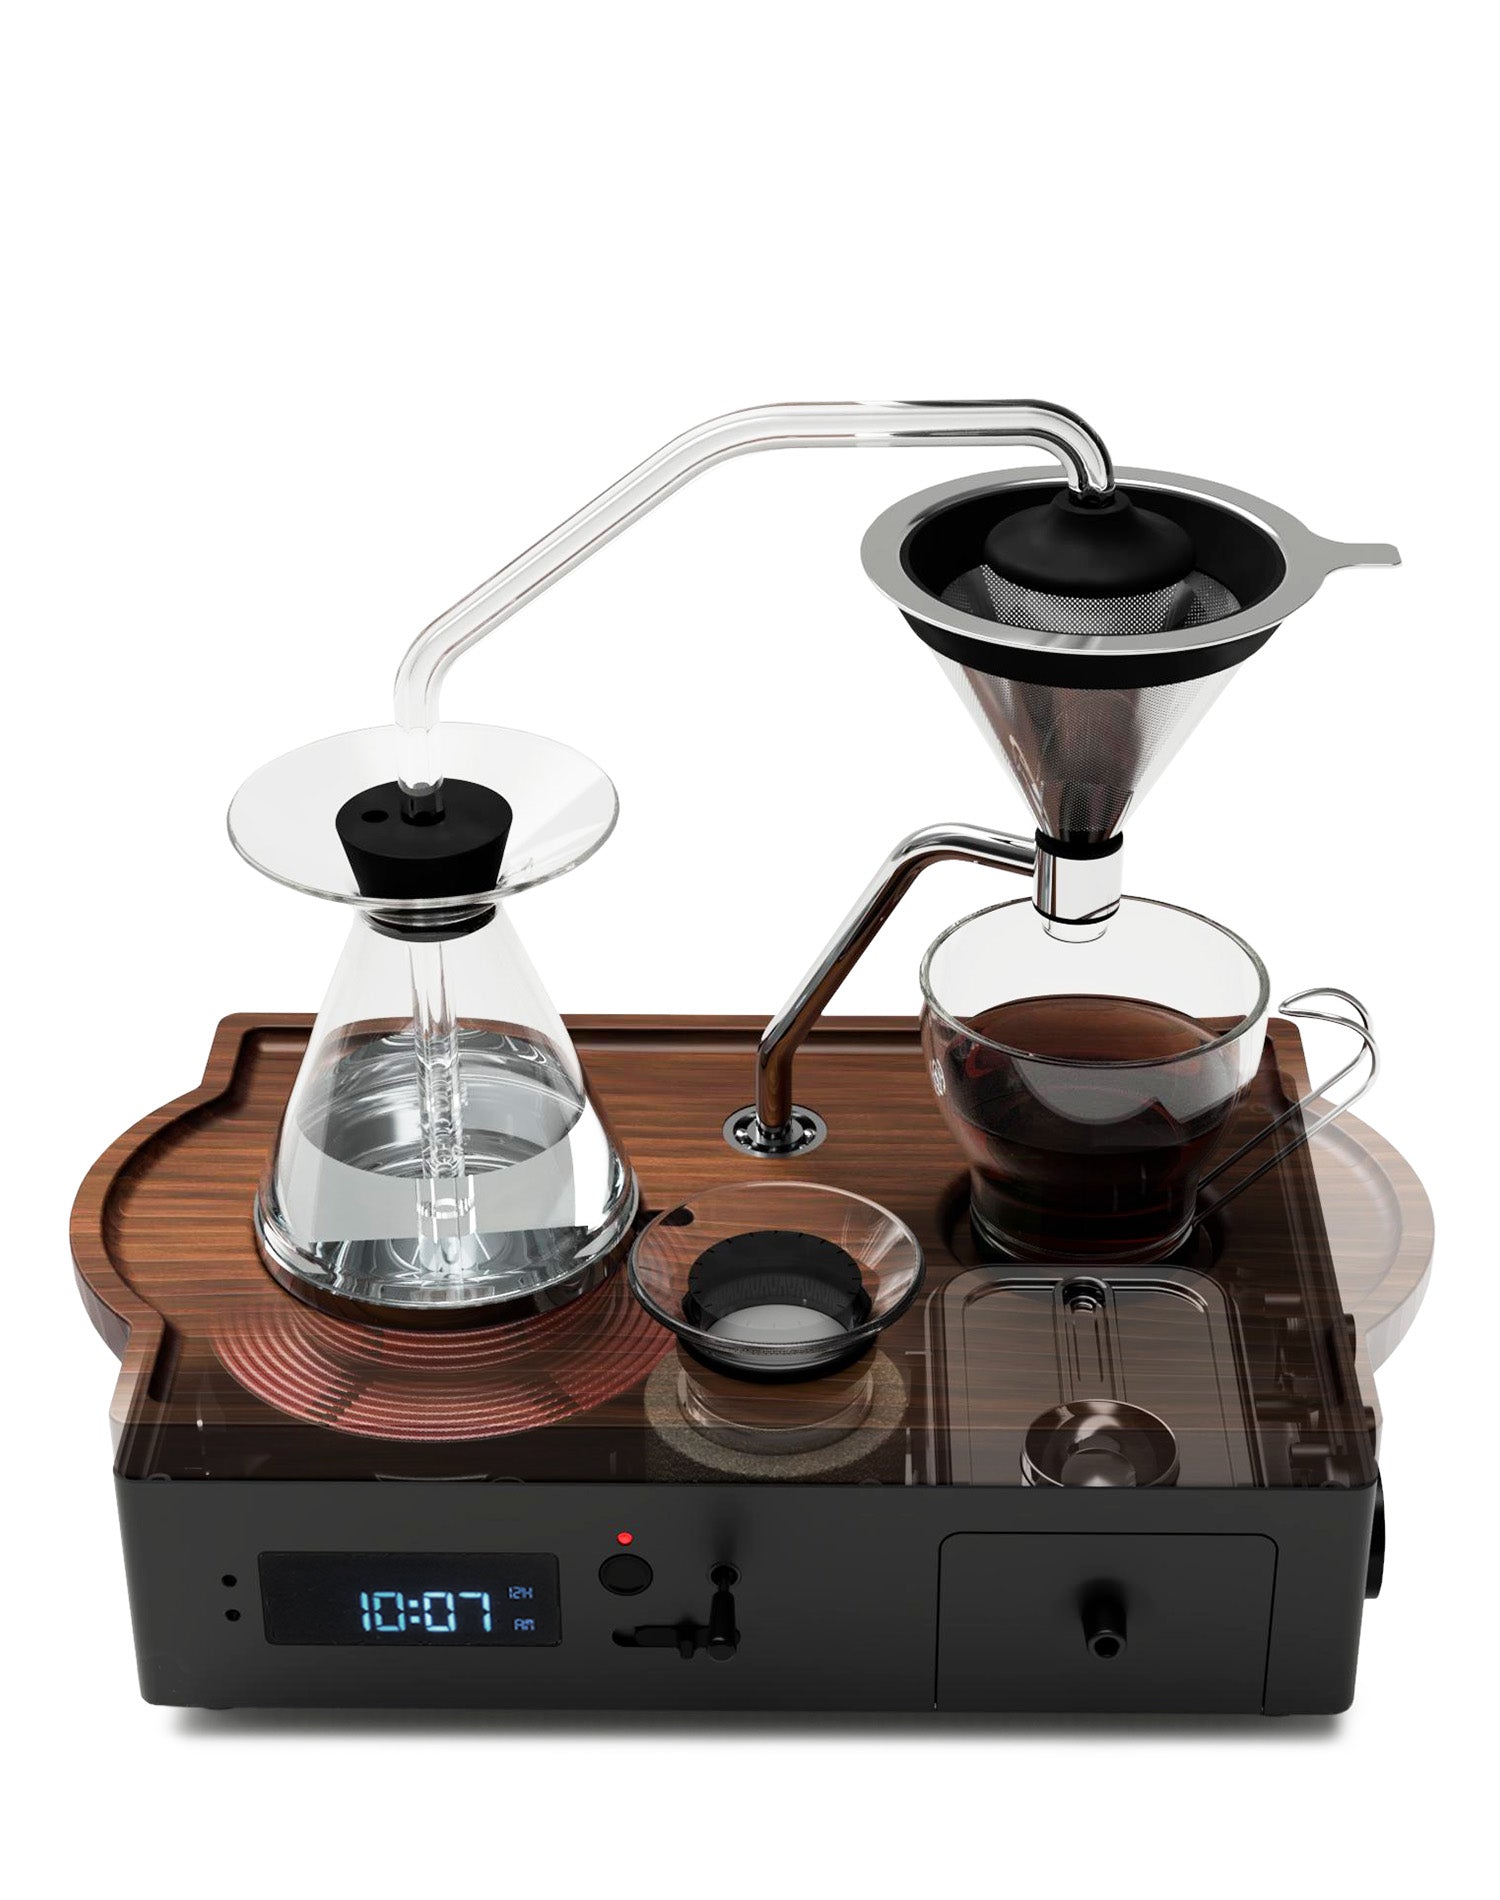 Coffee maker Alarm clock - electronics - by owner - sale - craigslist